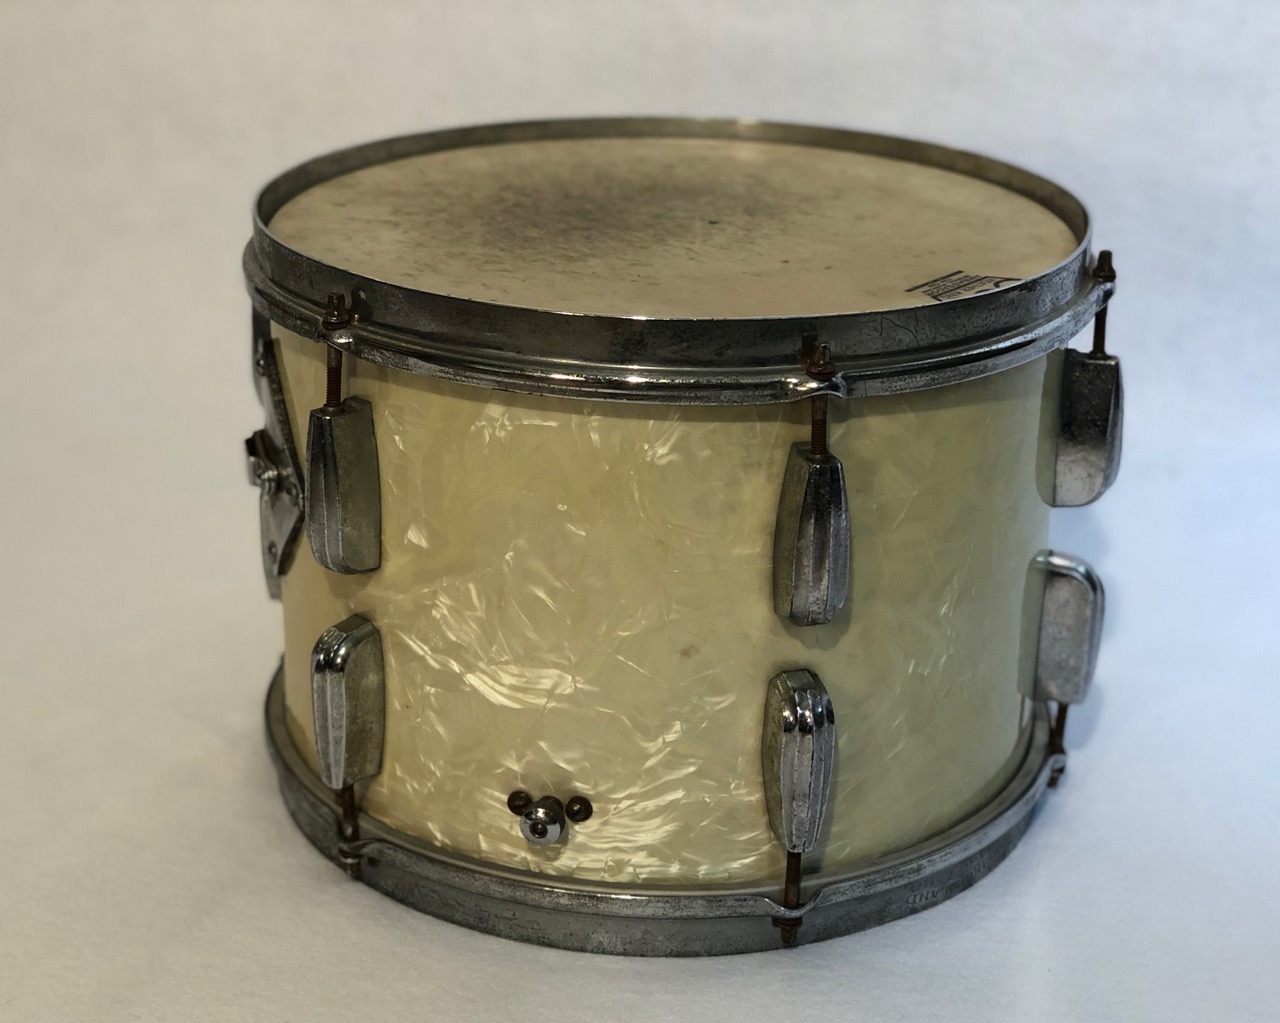 Gene Krupa drums, famous vintage drums, vintage instrument collection, drum collector, collectable antique